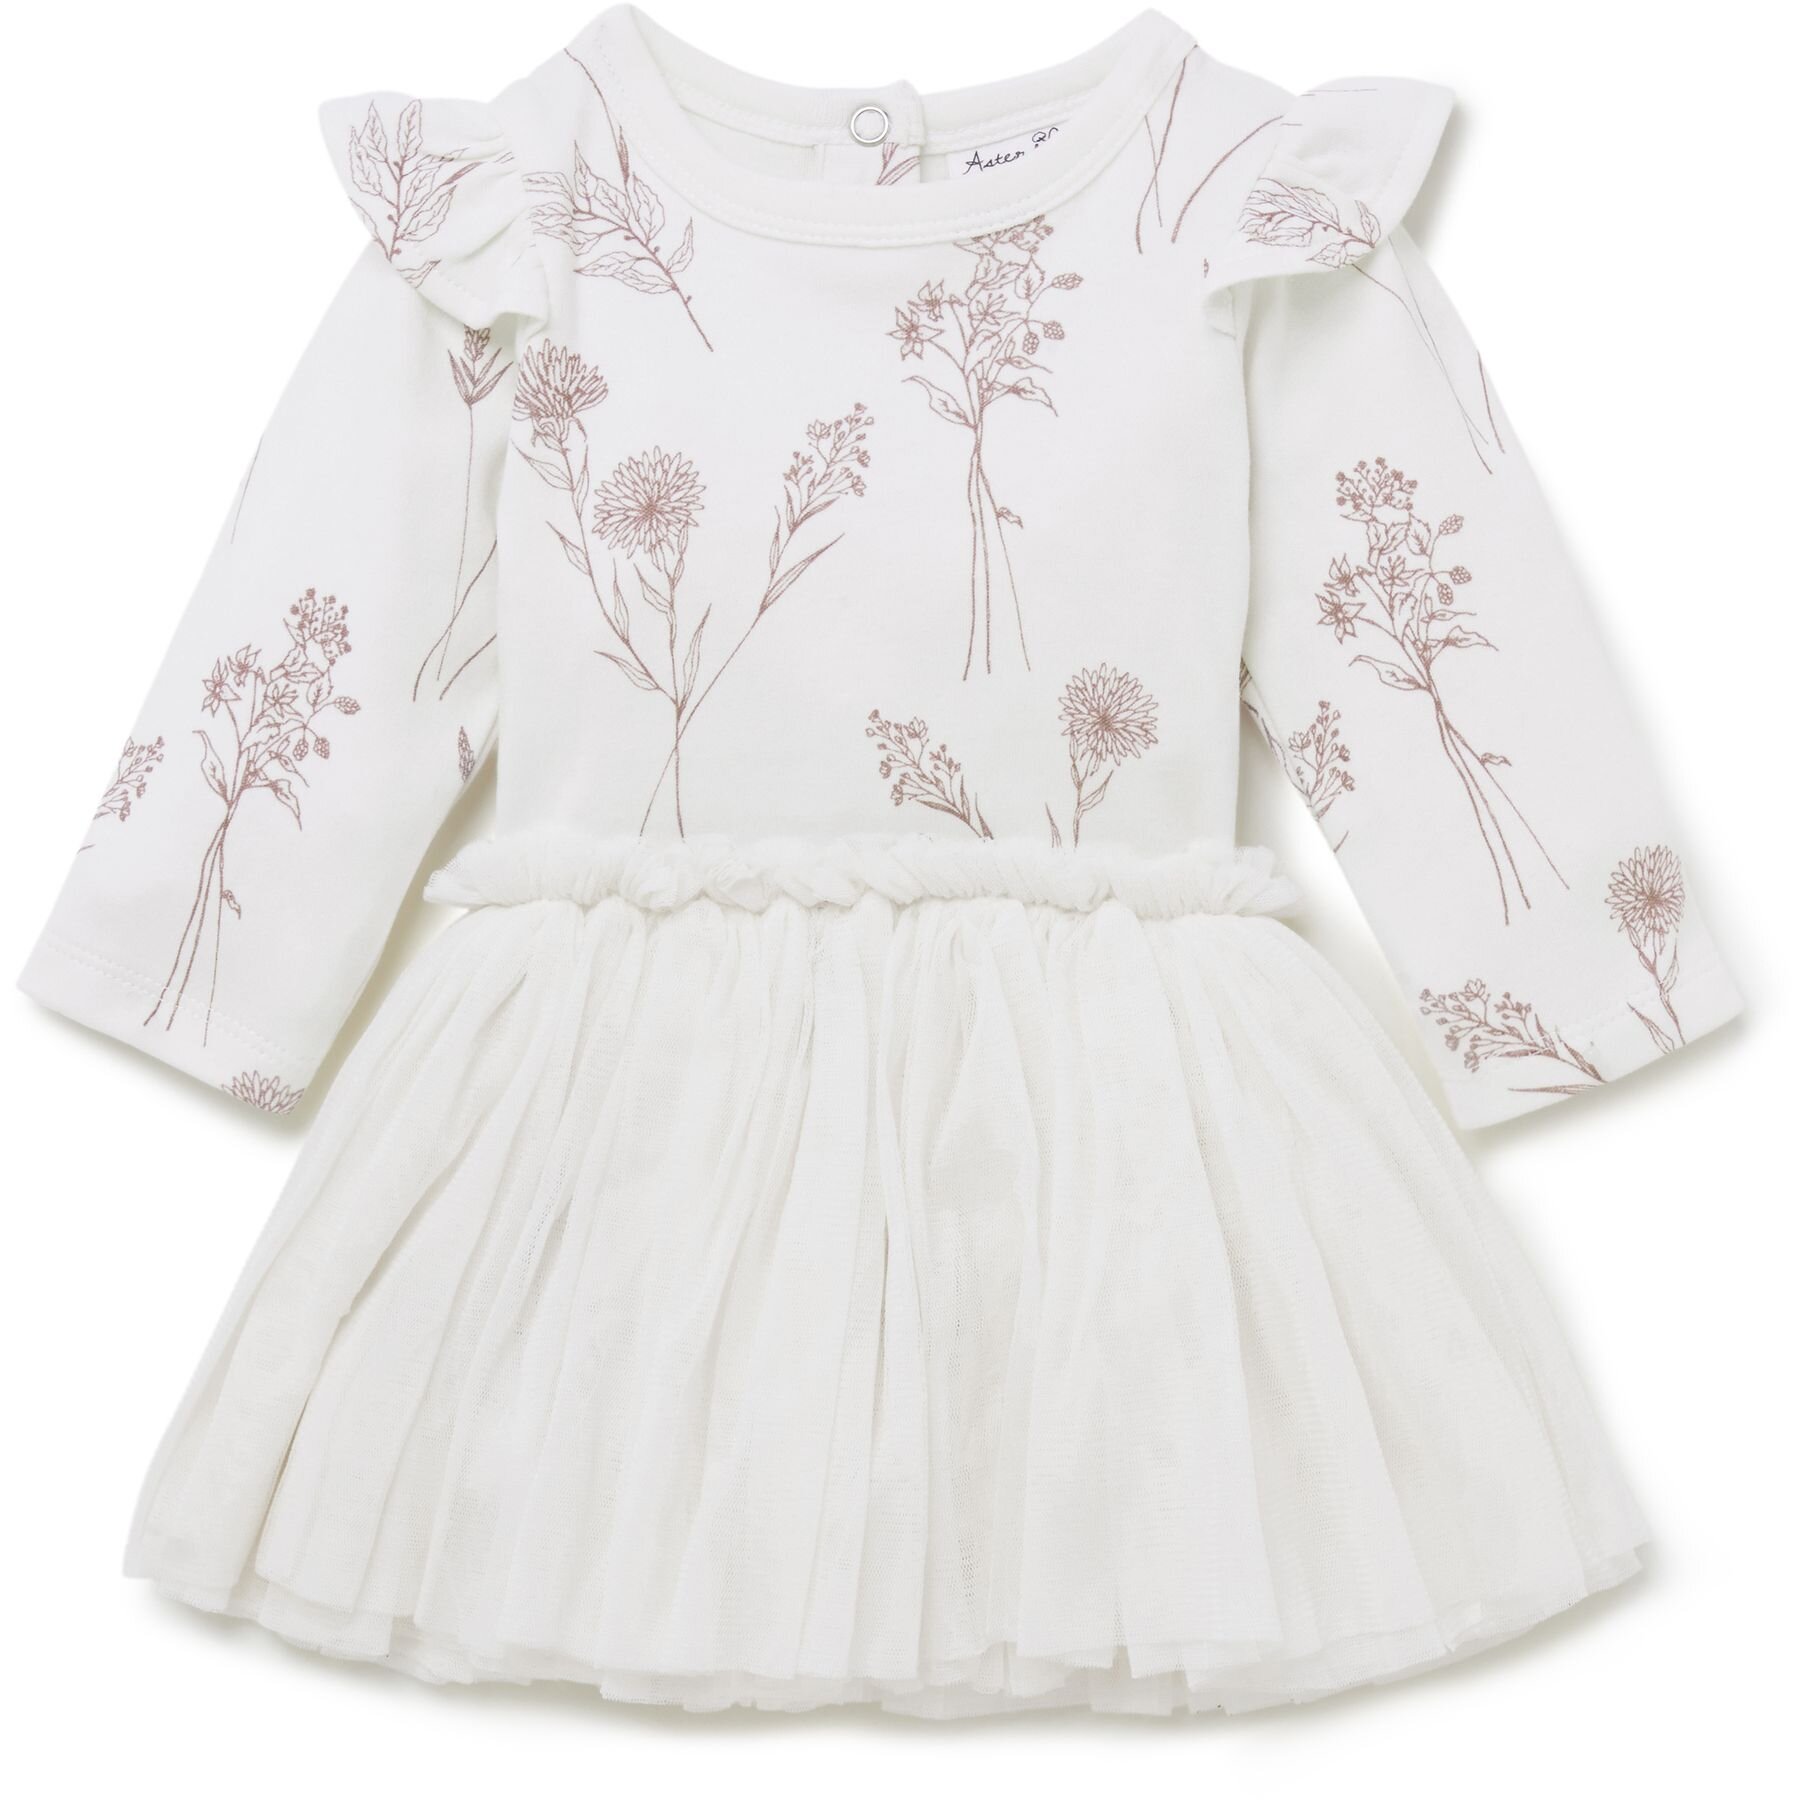 Aster & Oak Wildflower Tutu Dress - Cloud Dancer - CLOTHING-BABY 